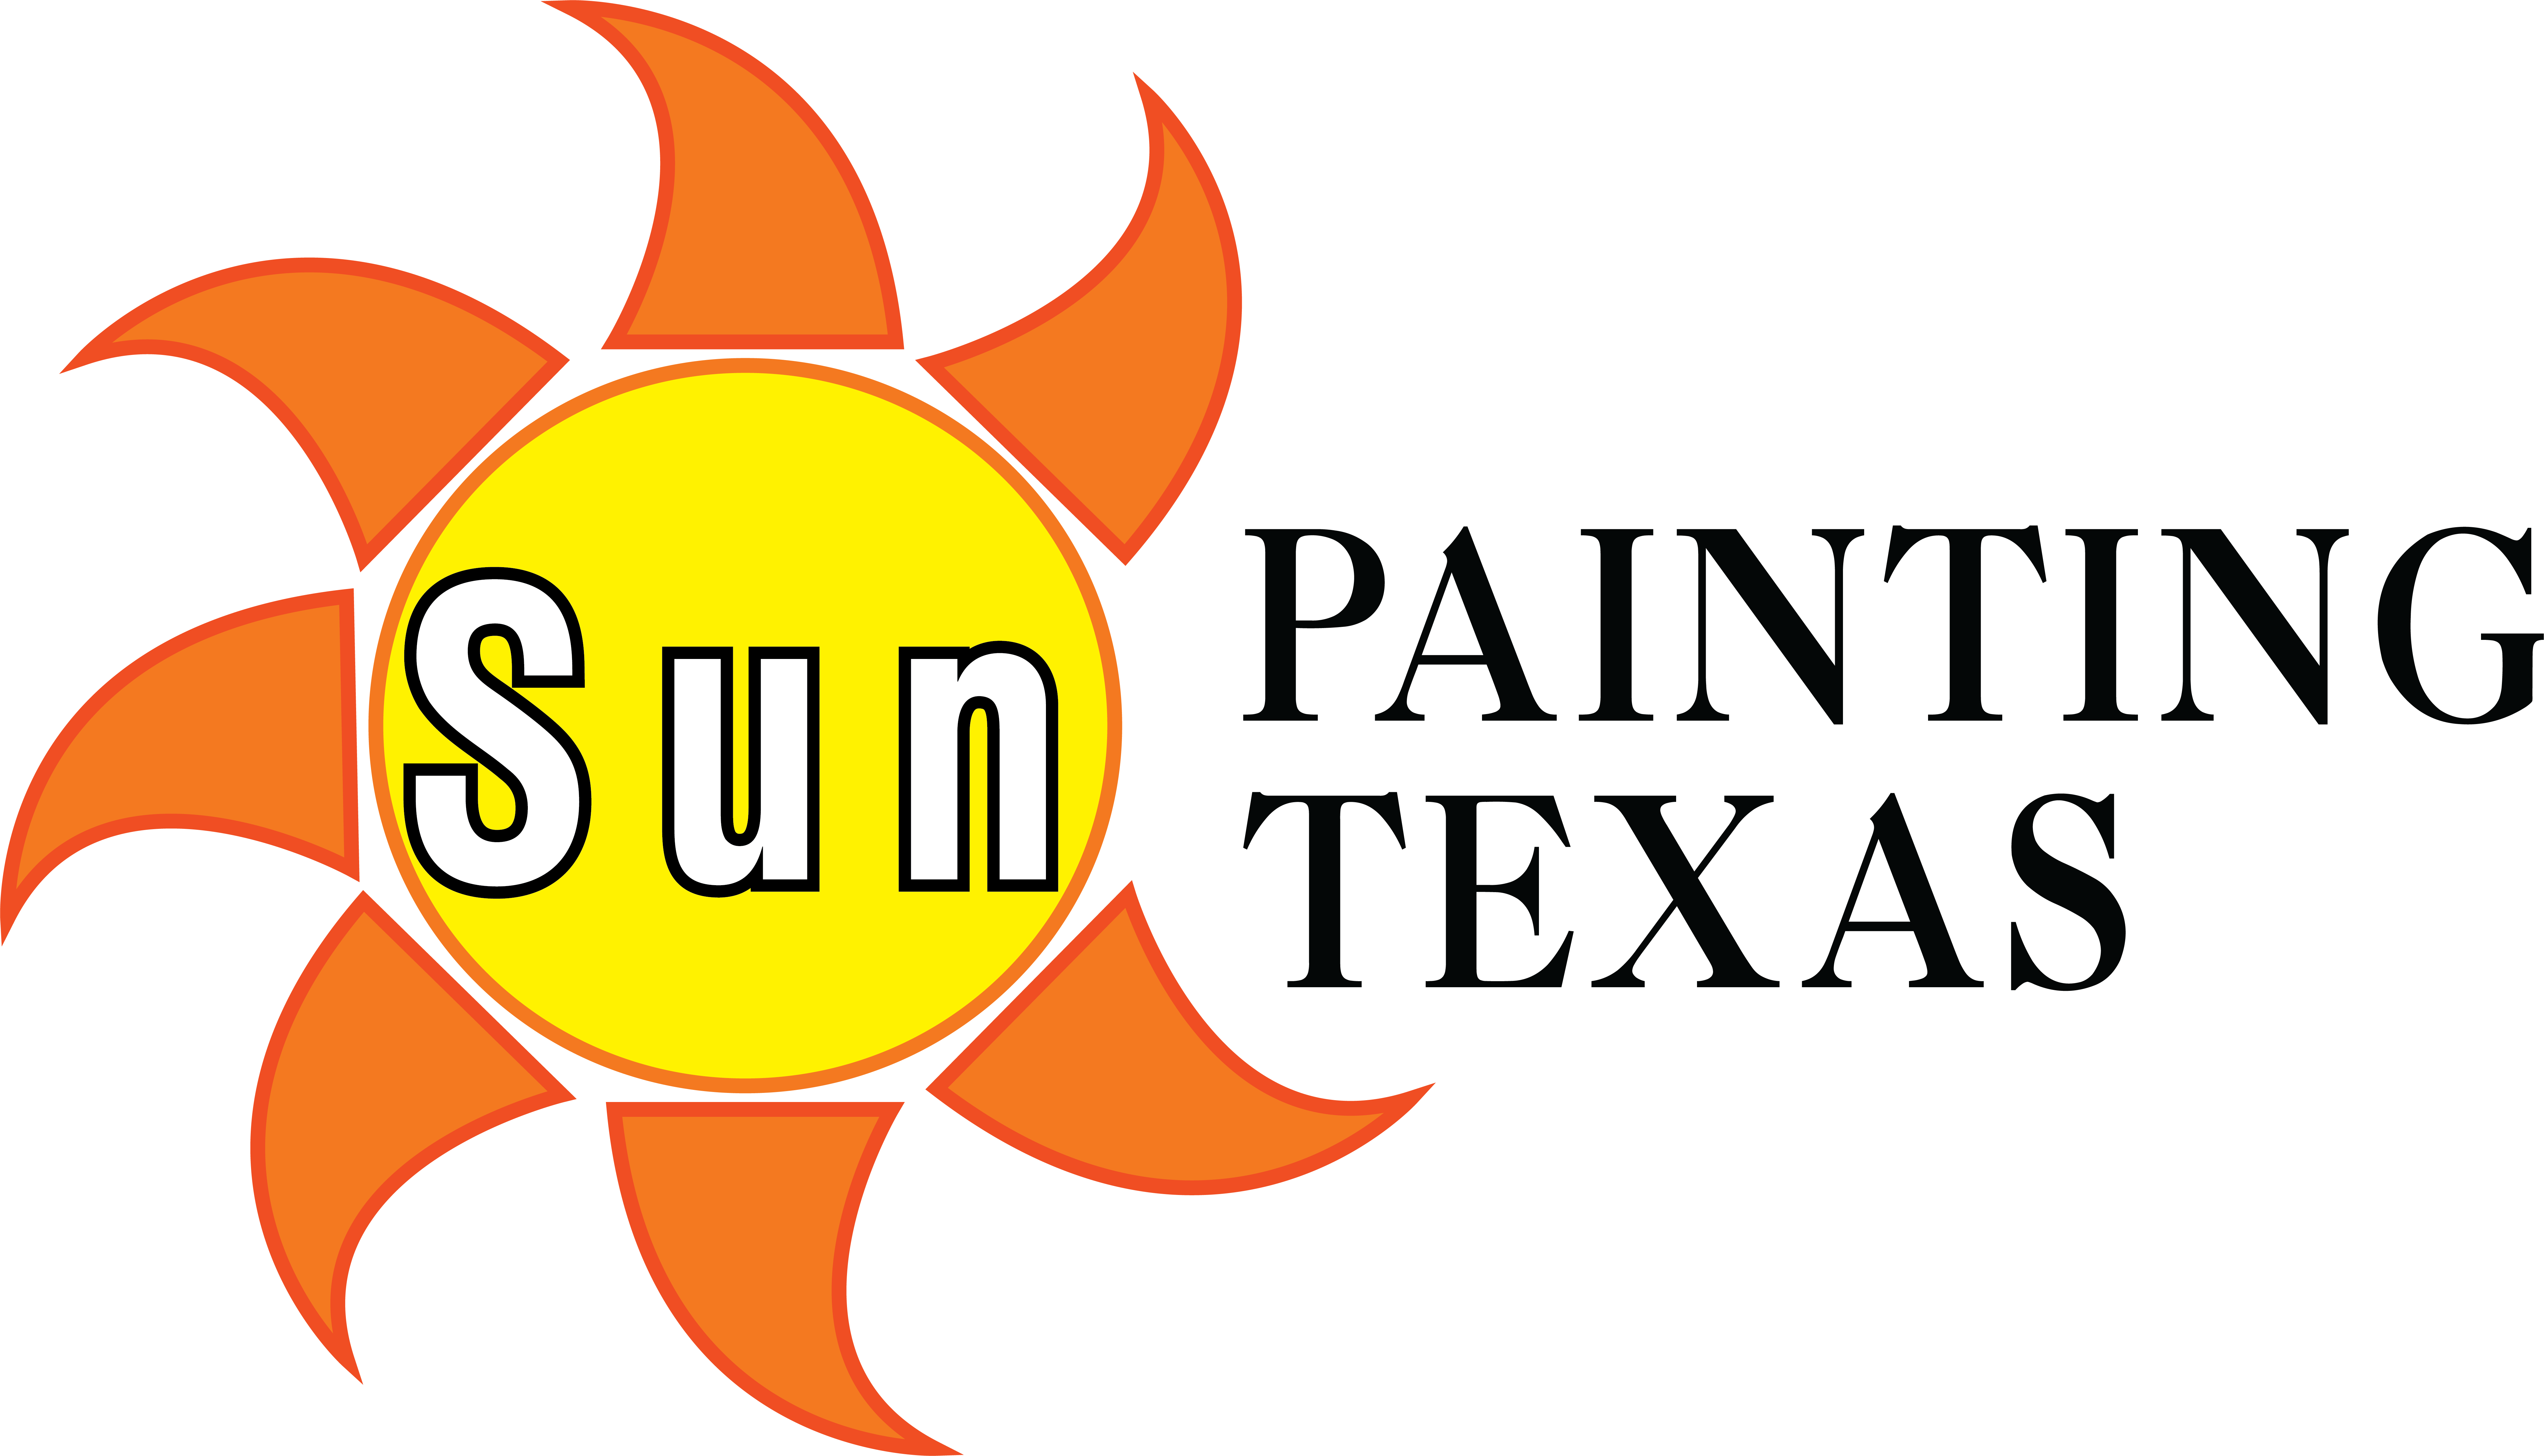 Sun painting Texas